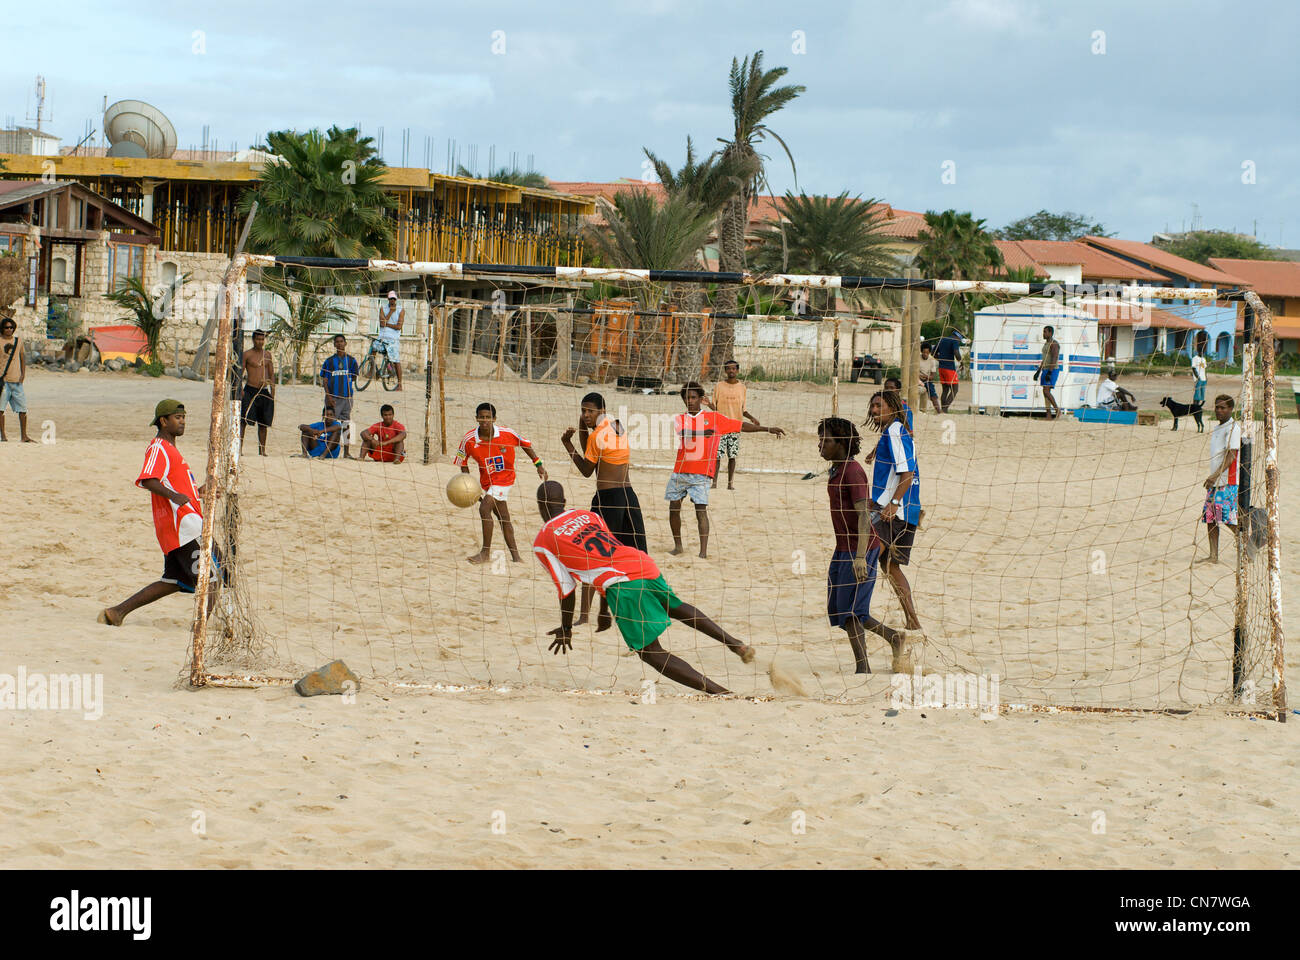 Cape Verde, Sal island, Santa Maria, football match on the beach Stock Photo